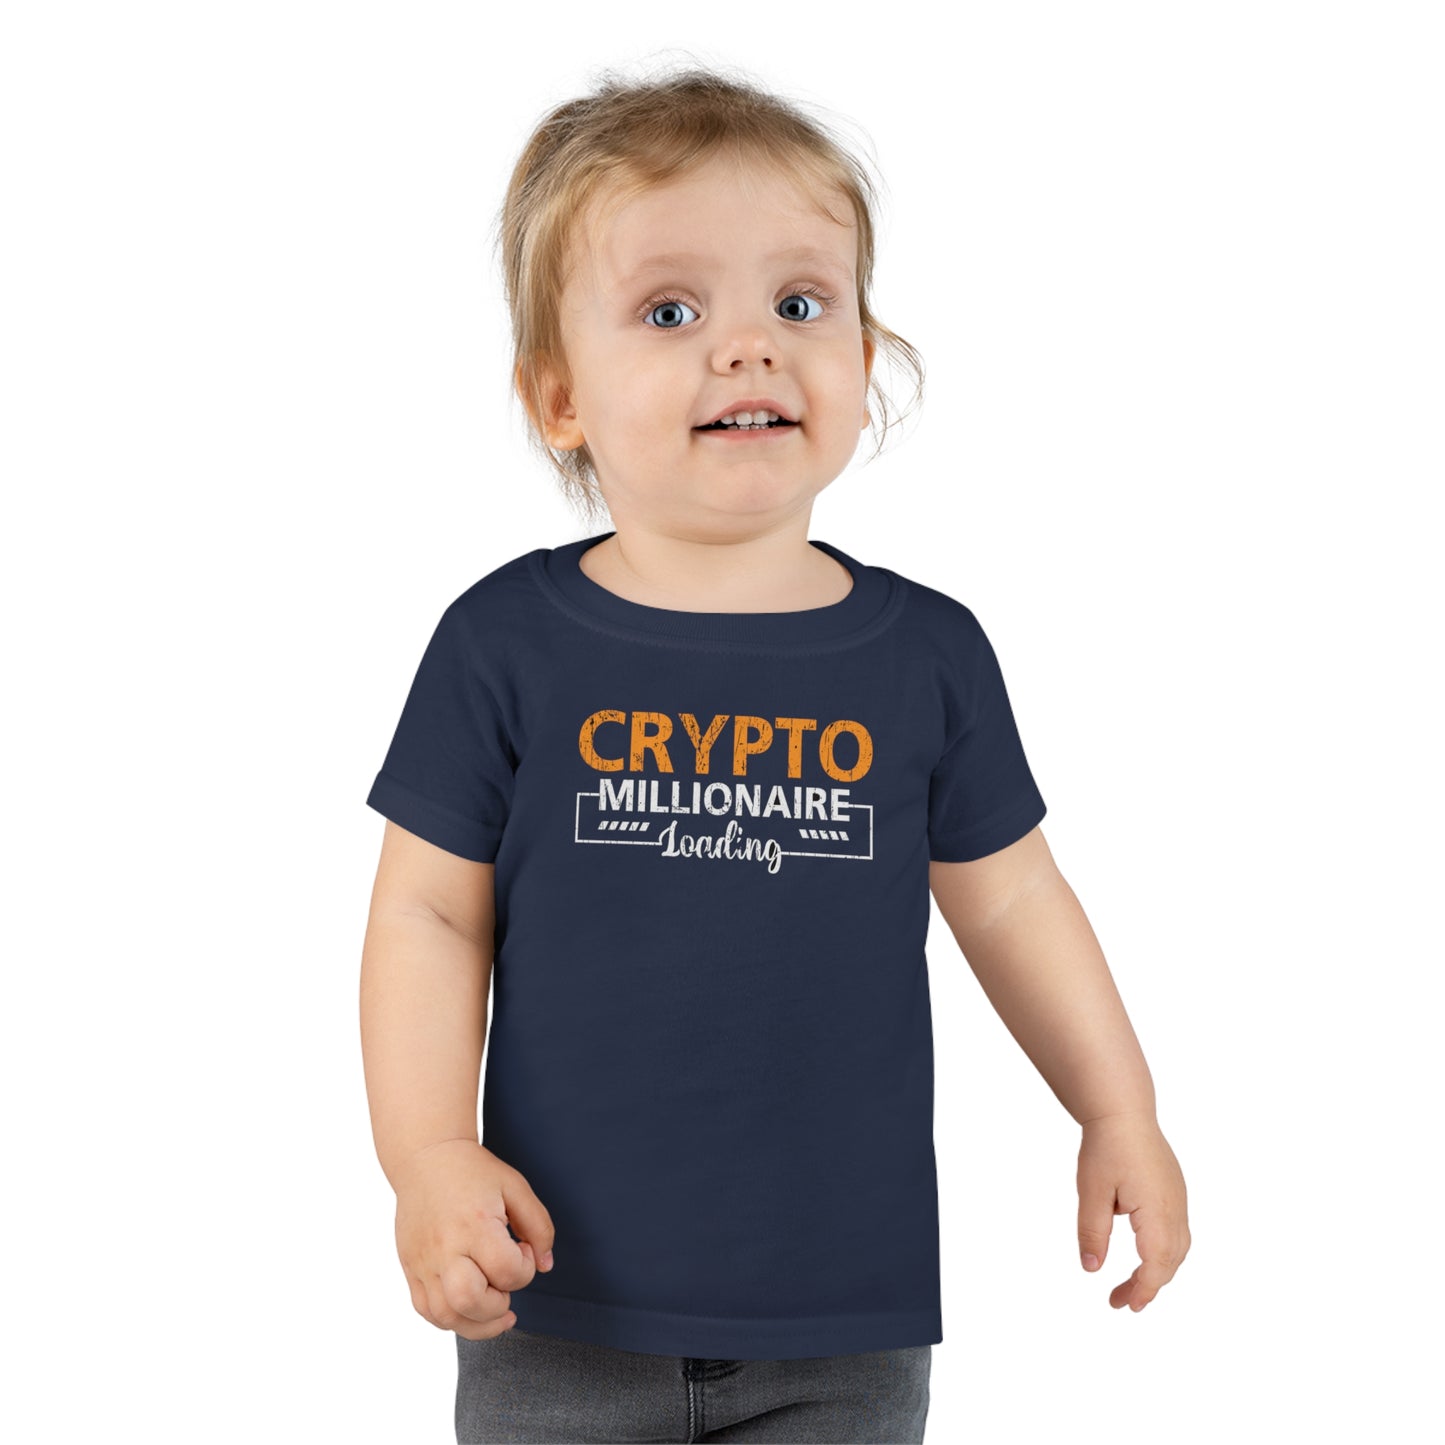 Toddler T-shirt (Crypto Millionaire)